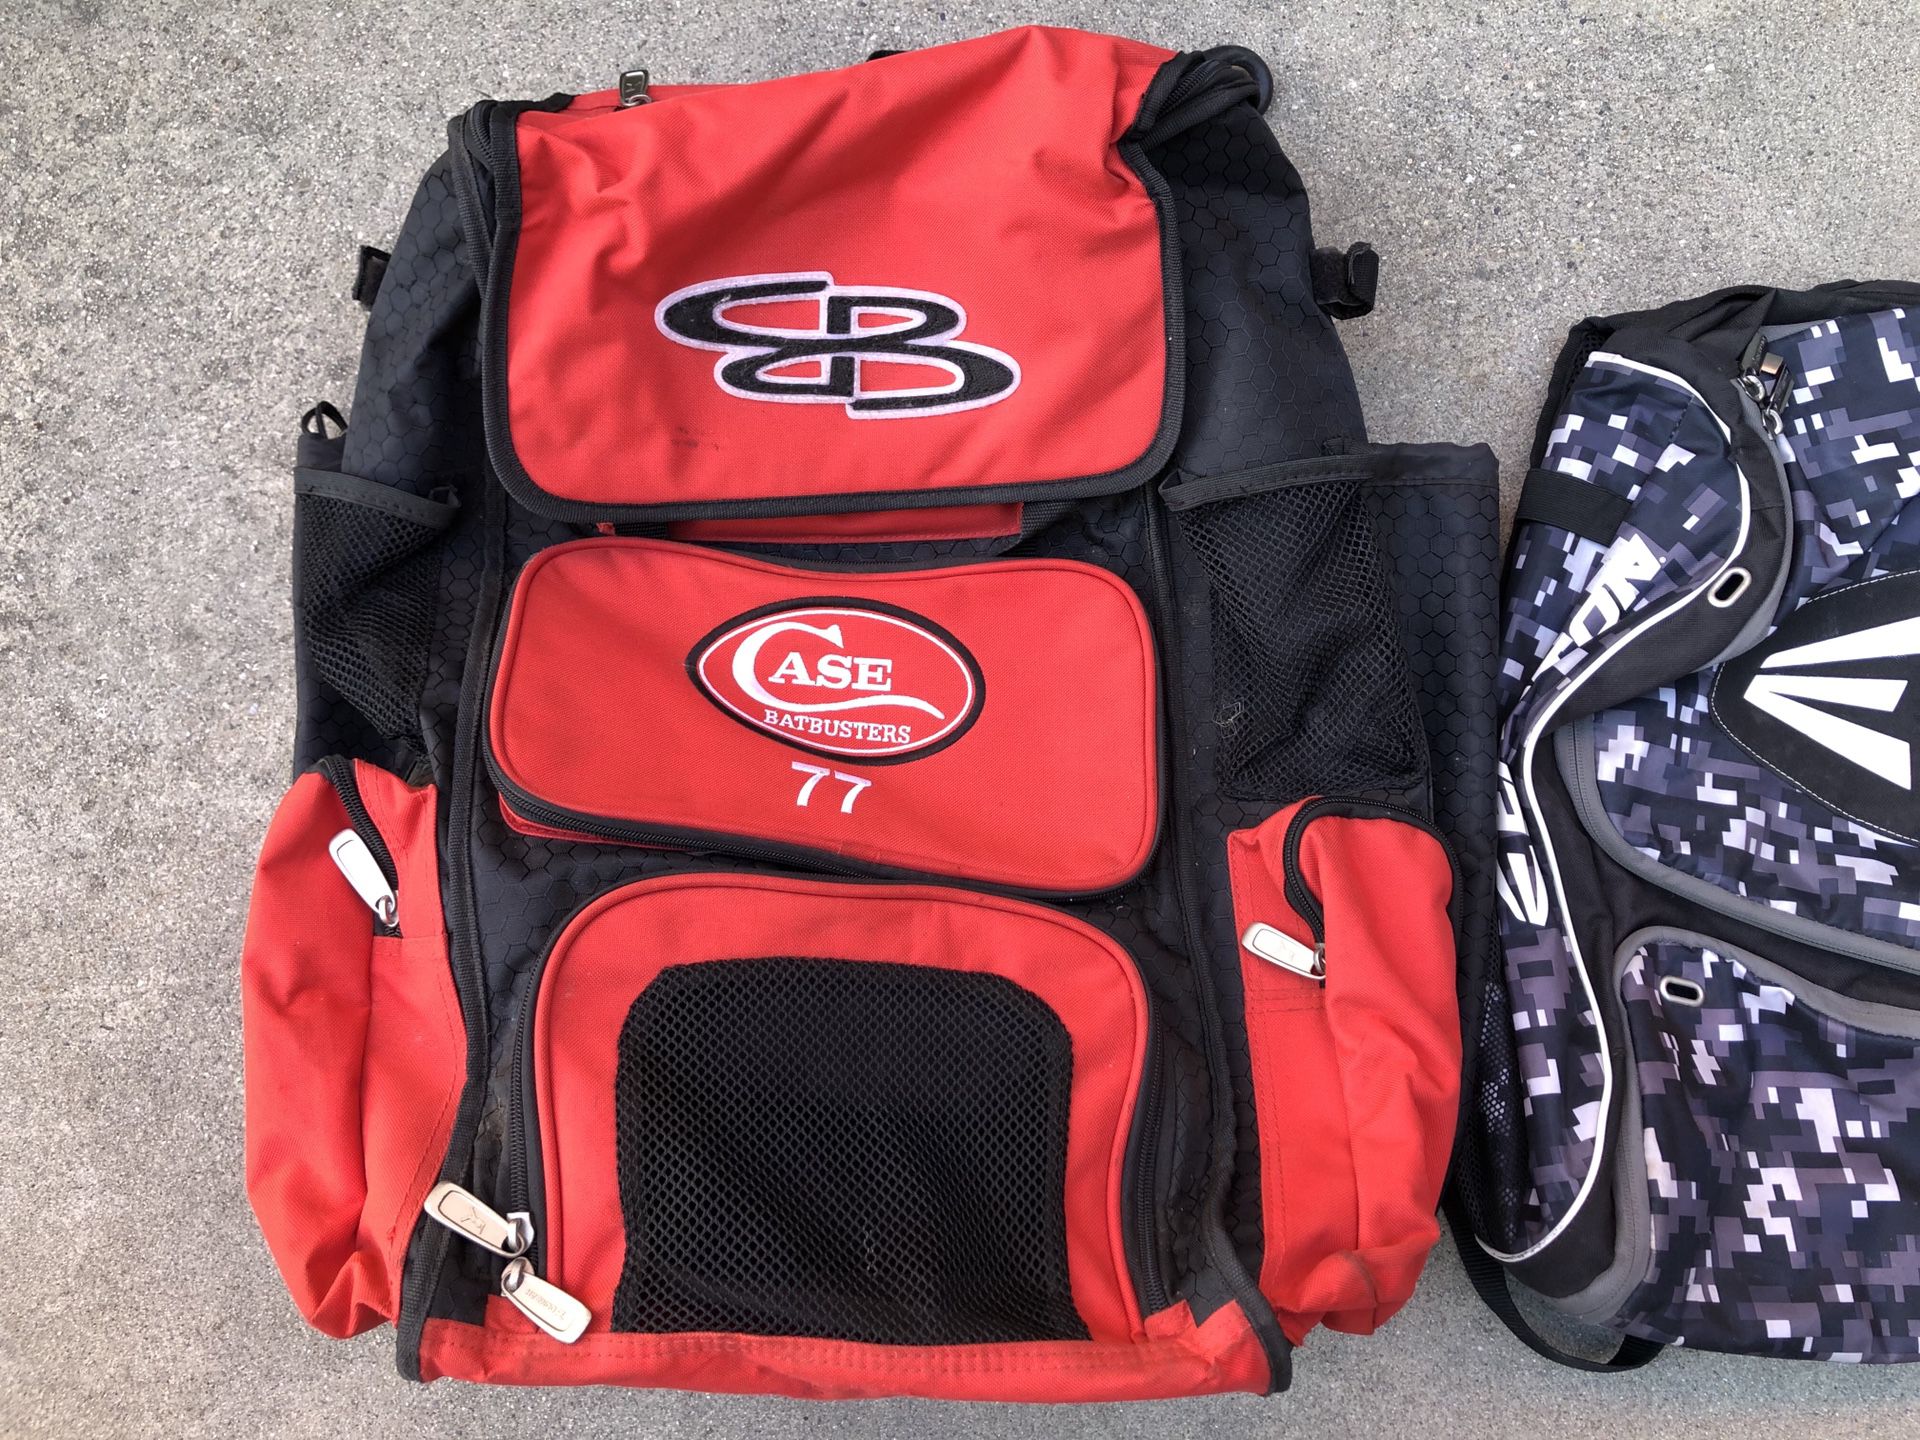 Baseball bag softball bag equipment gear large size backpack boombah gloves bats